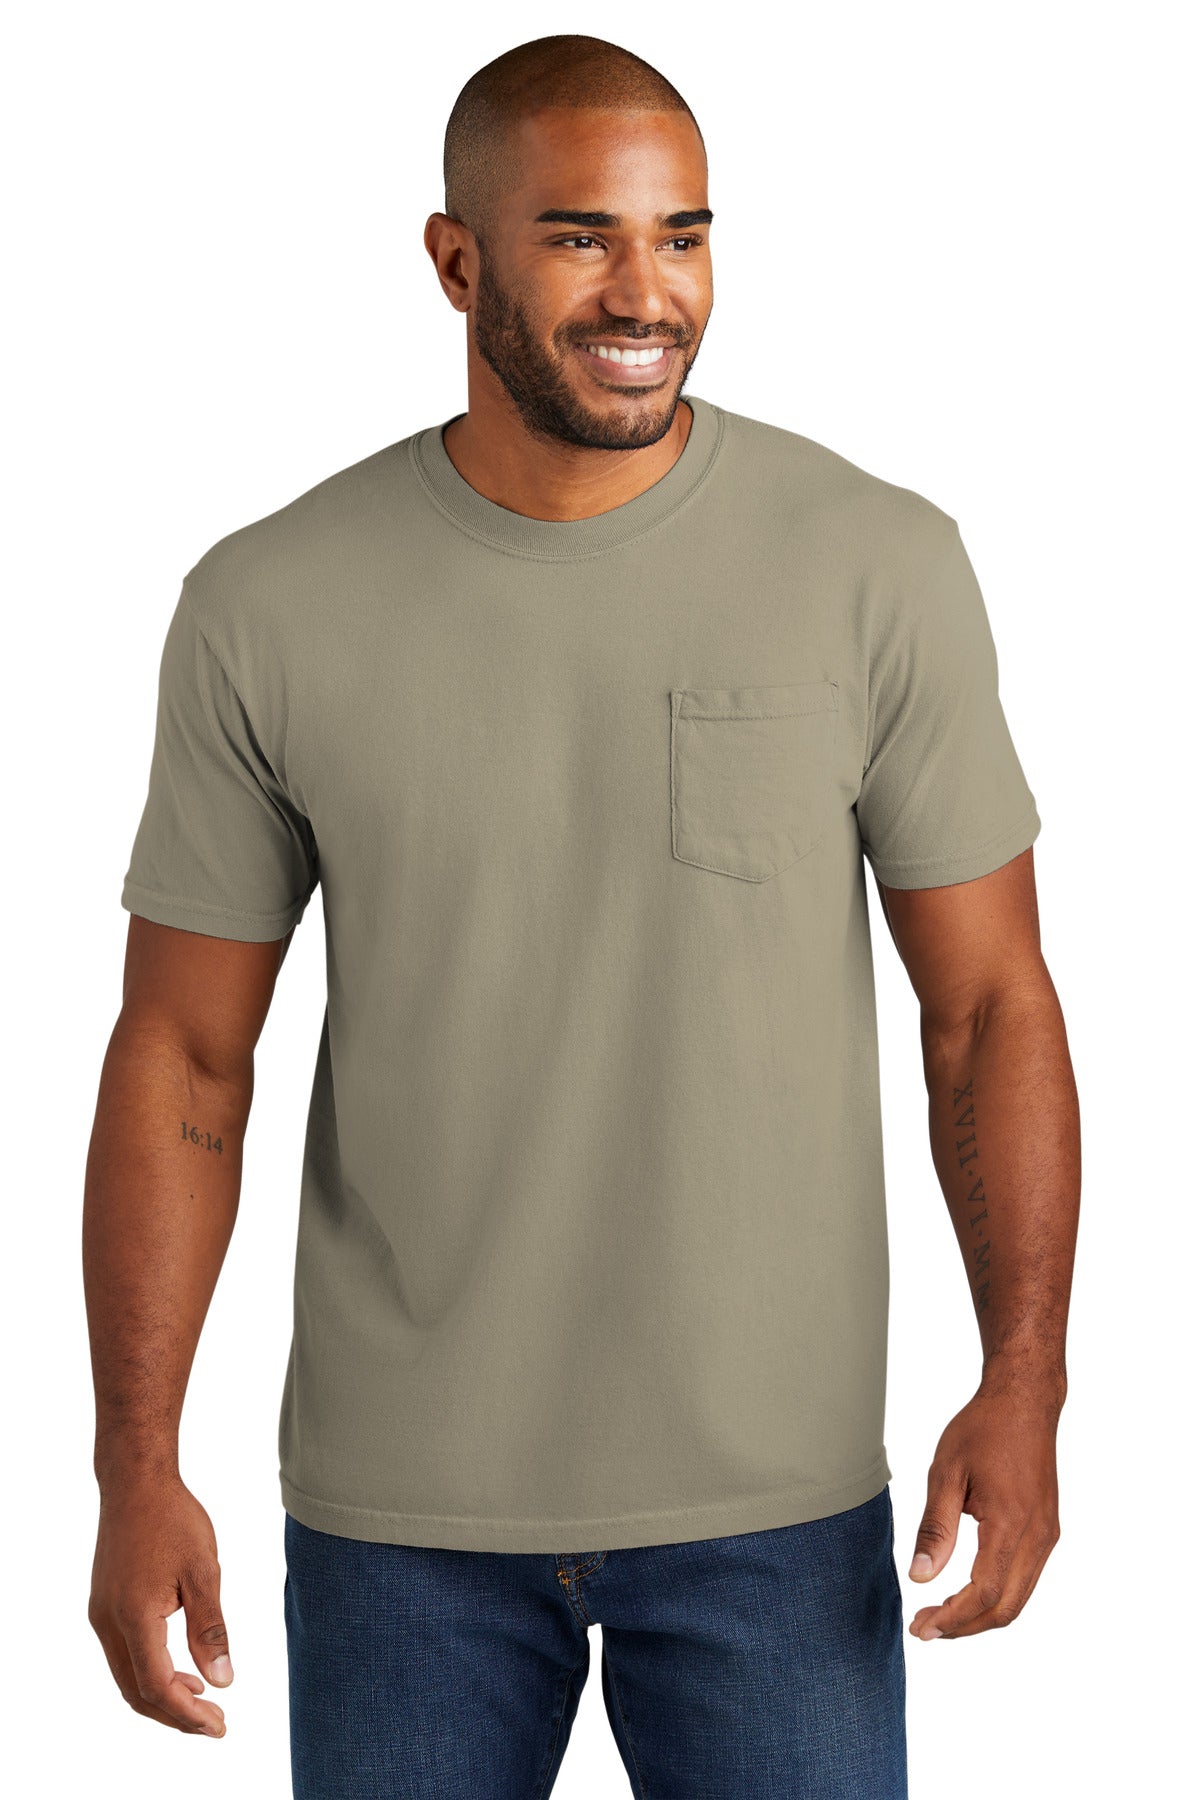 Unisex Garment-Dyed Pocket T-Shirt - Comfort Colors 6030